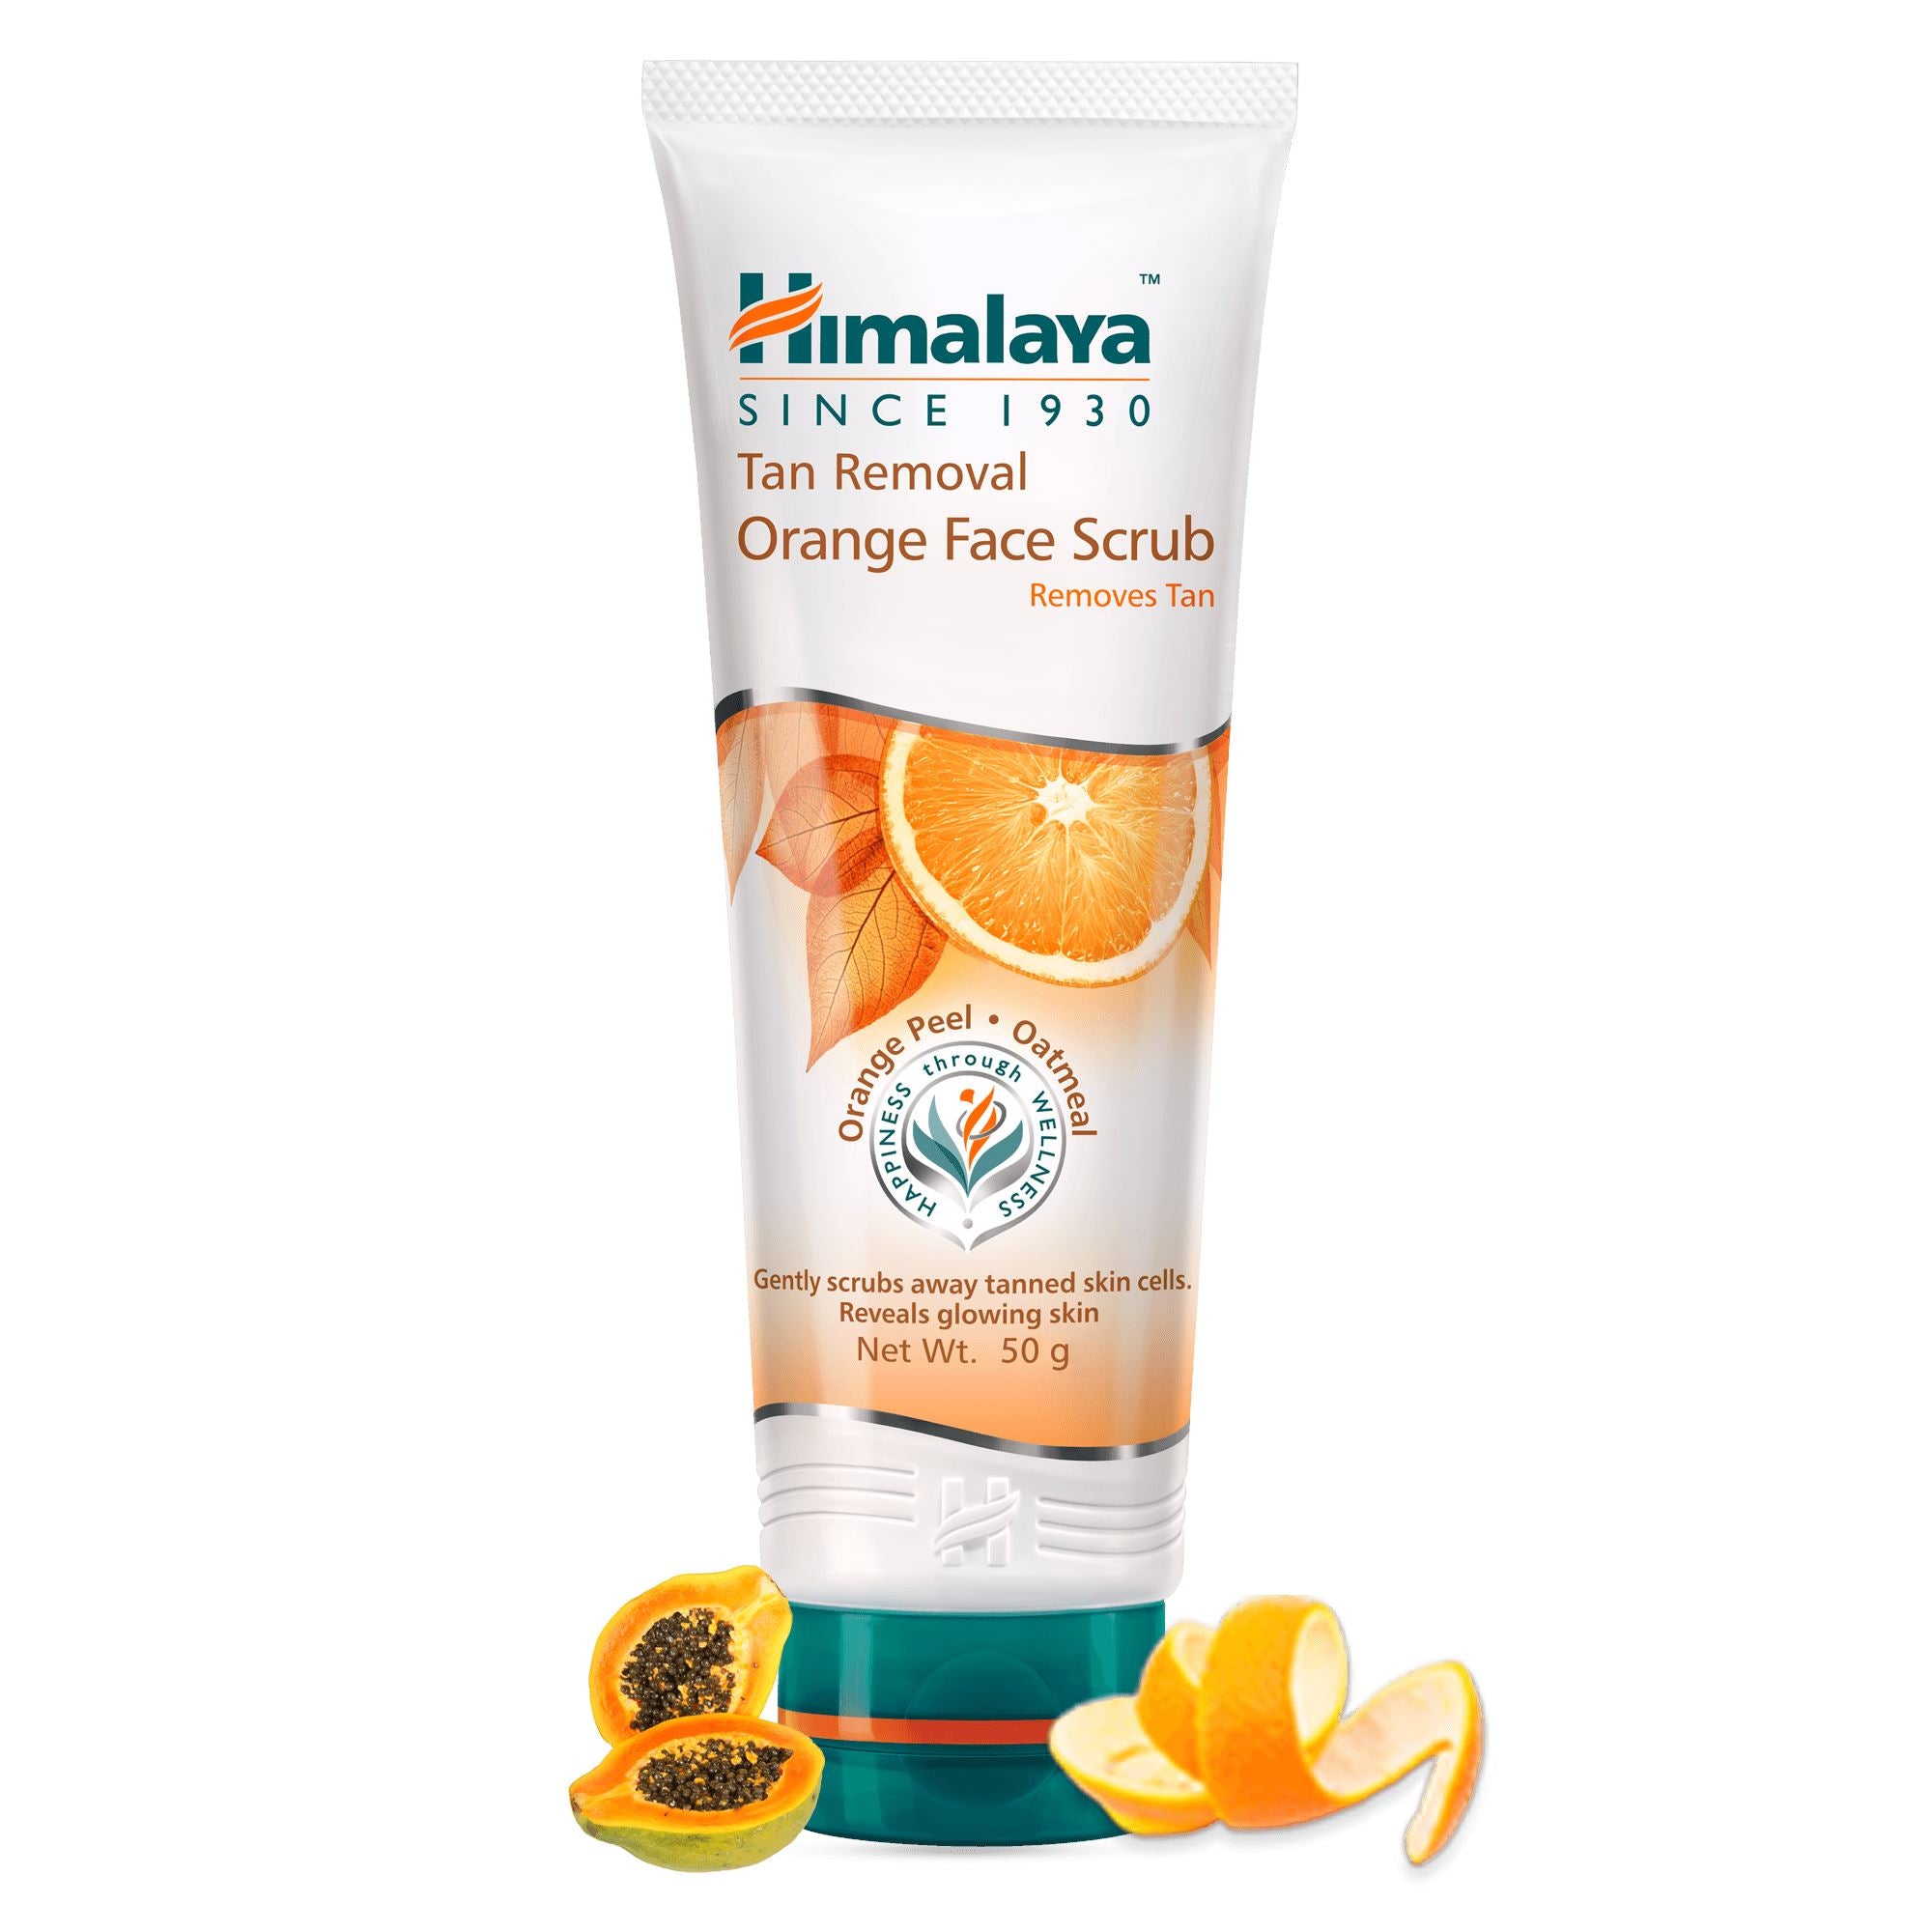 Himalaya Tan Removal Orange Face Scrub 50g - Gently scrubs away tanned skin cells